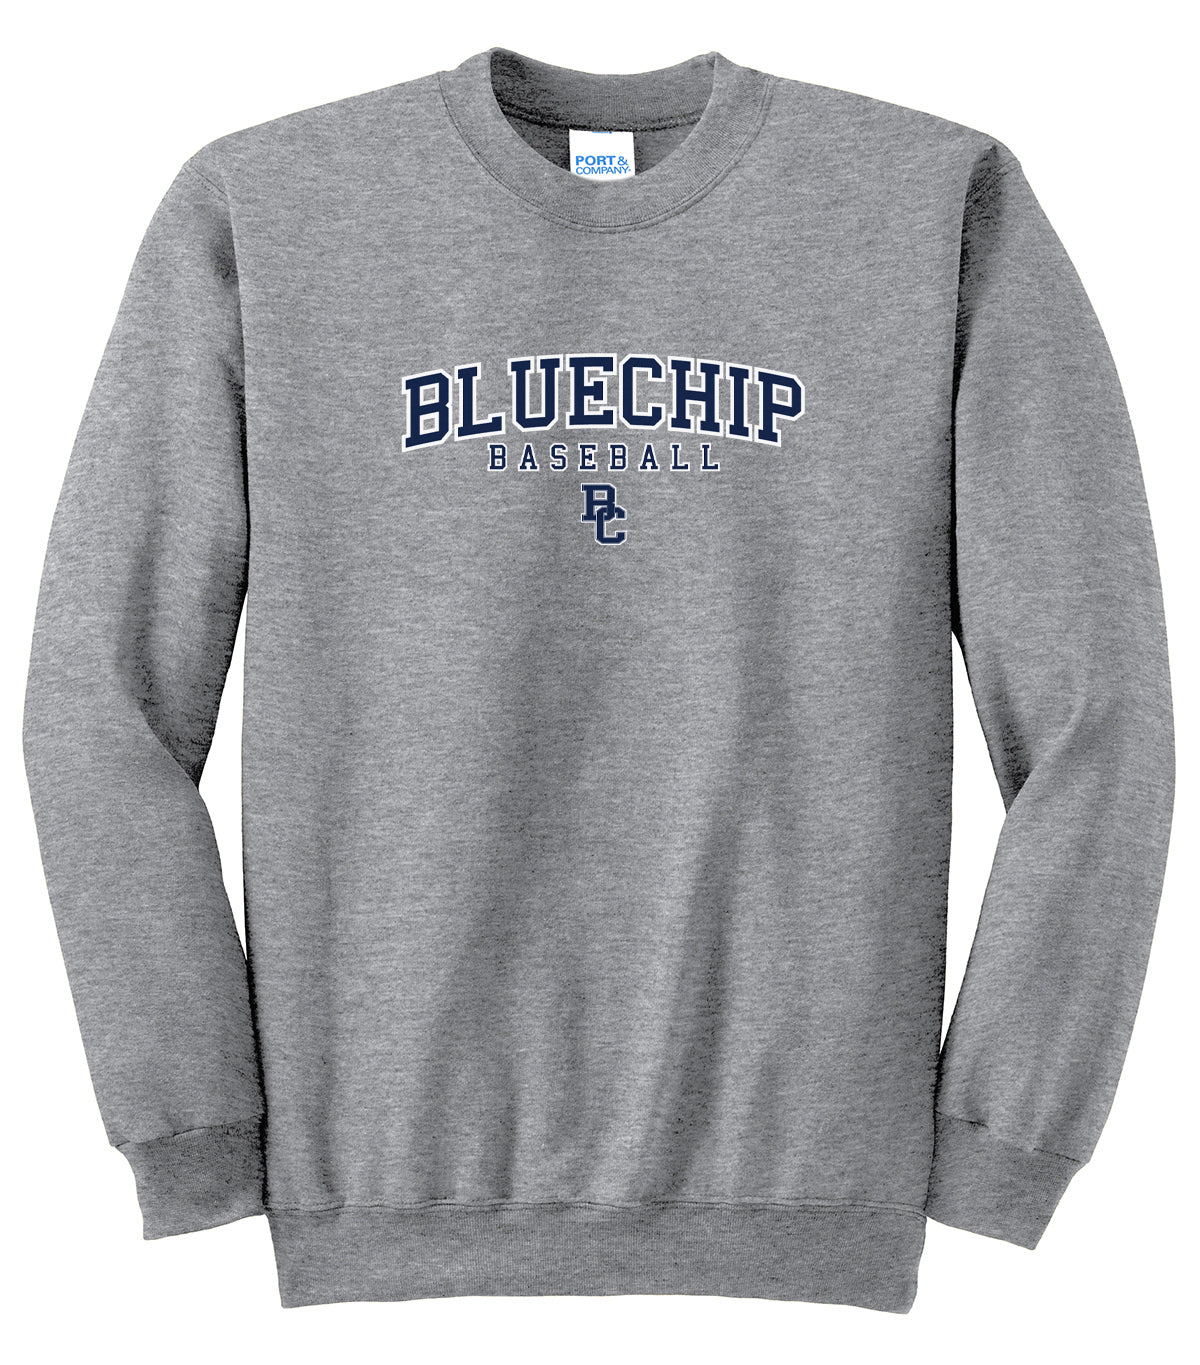 BlueChip Baseball Crew Neck Sweater